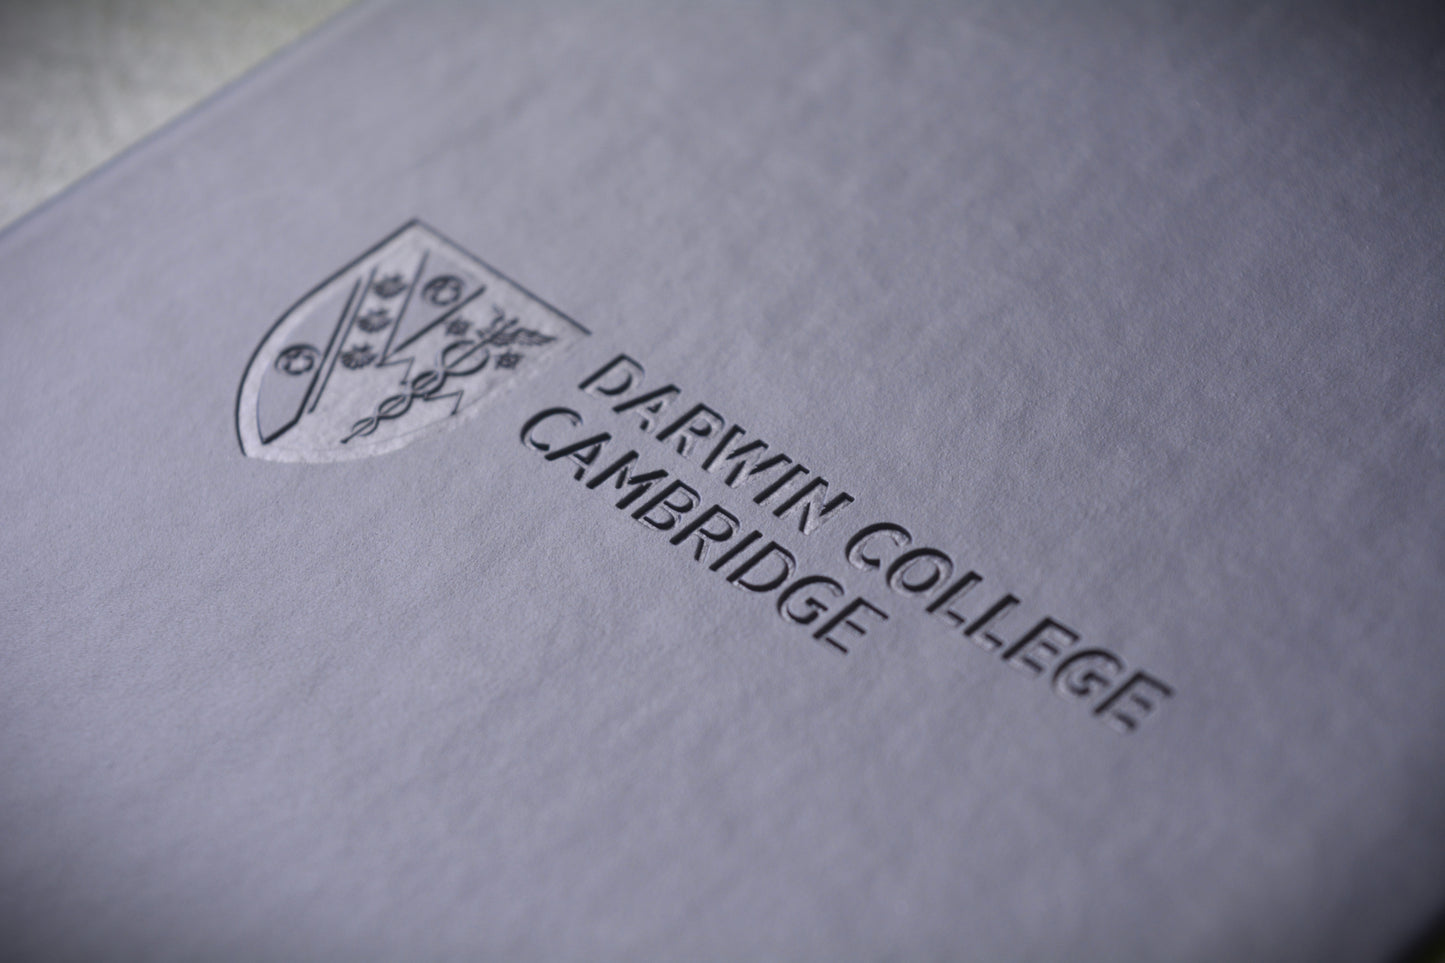 Darwin College Embossed Notebook